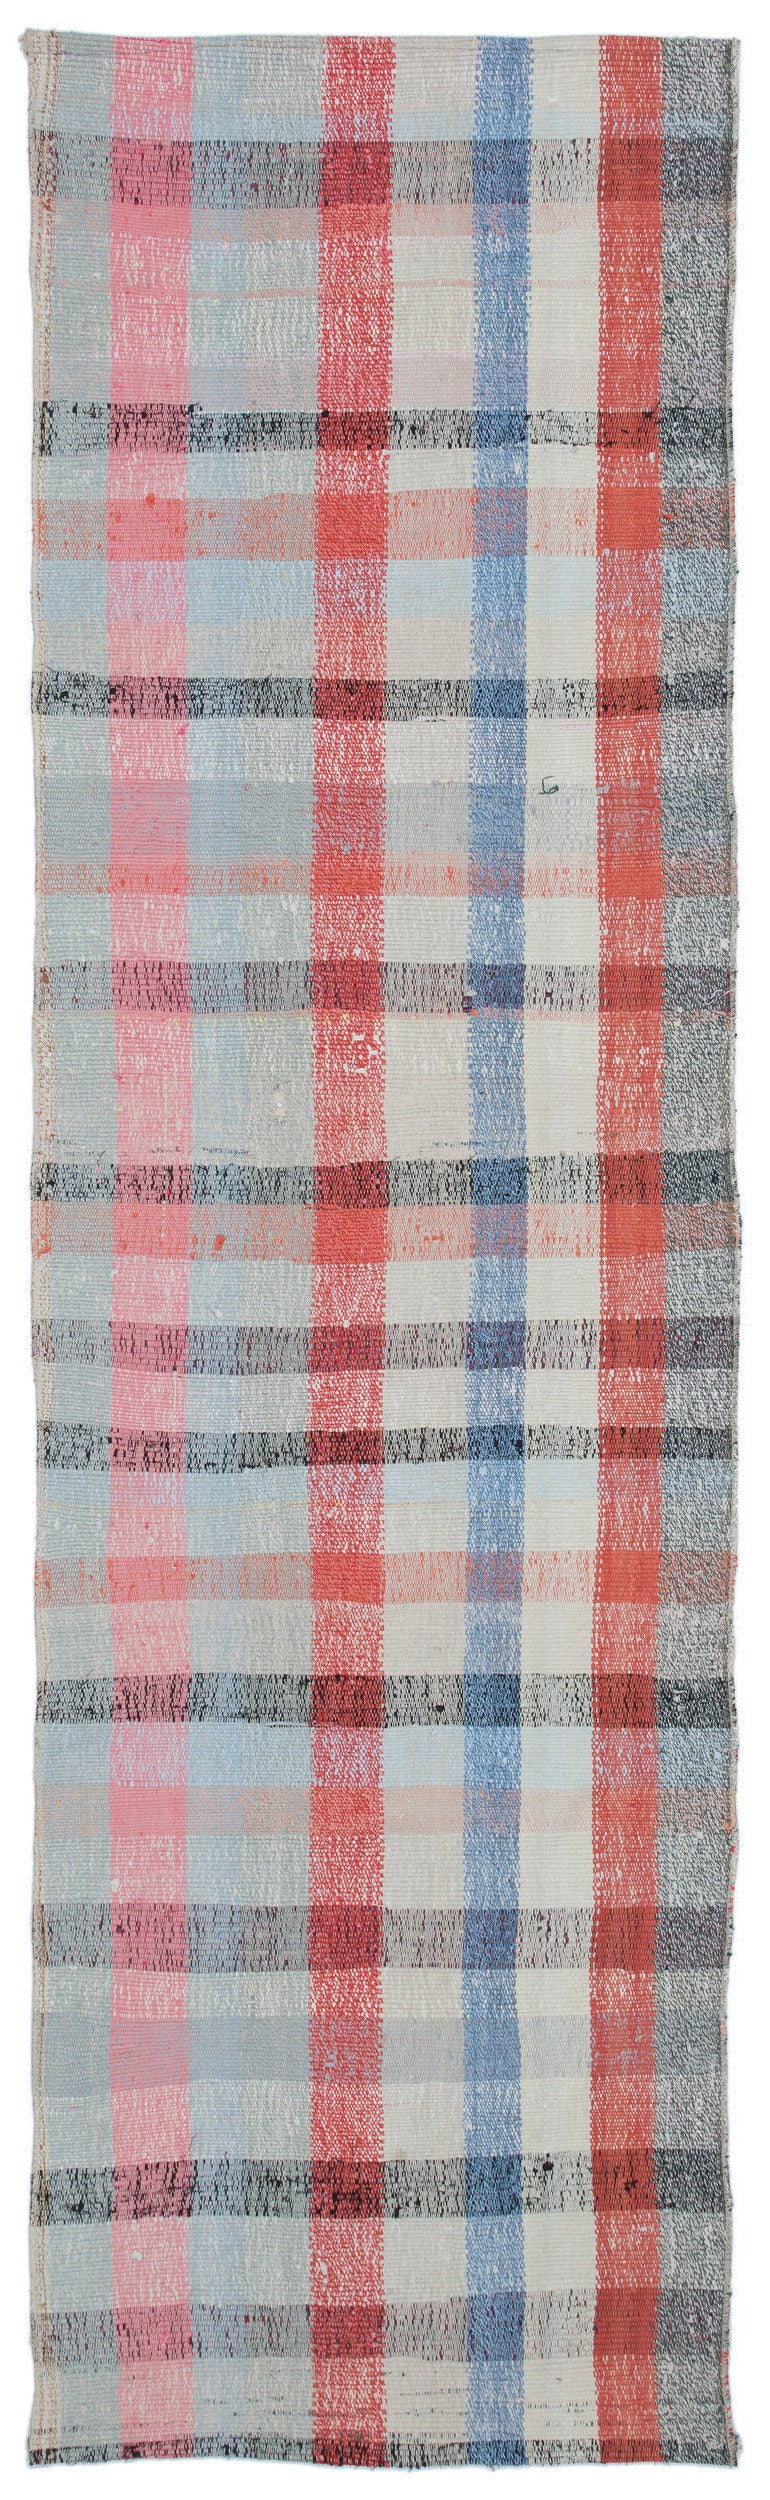 Cretan Beige Striped Wool Hand-Woven Carpet 073 x 255